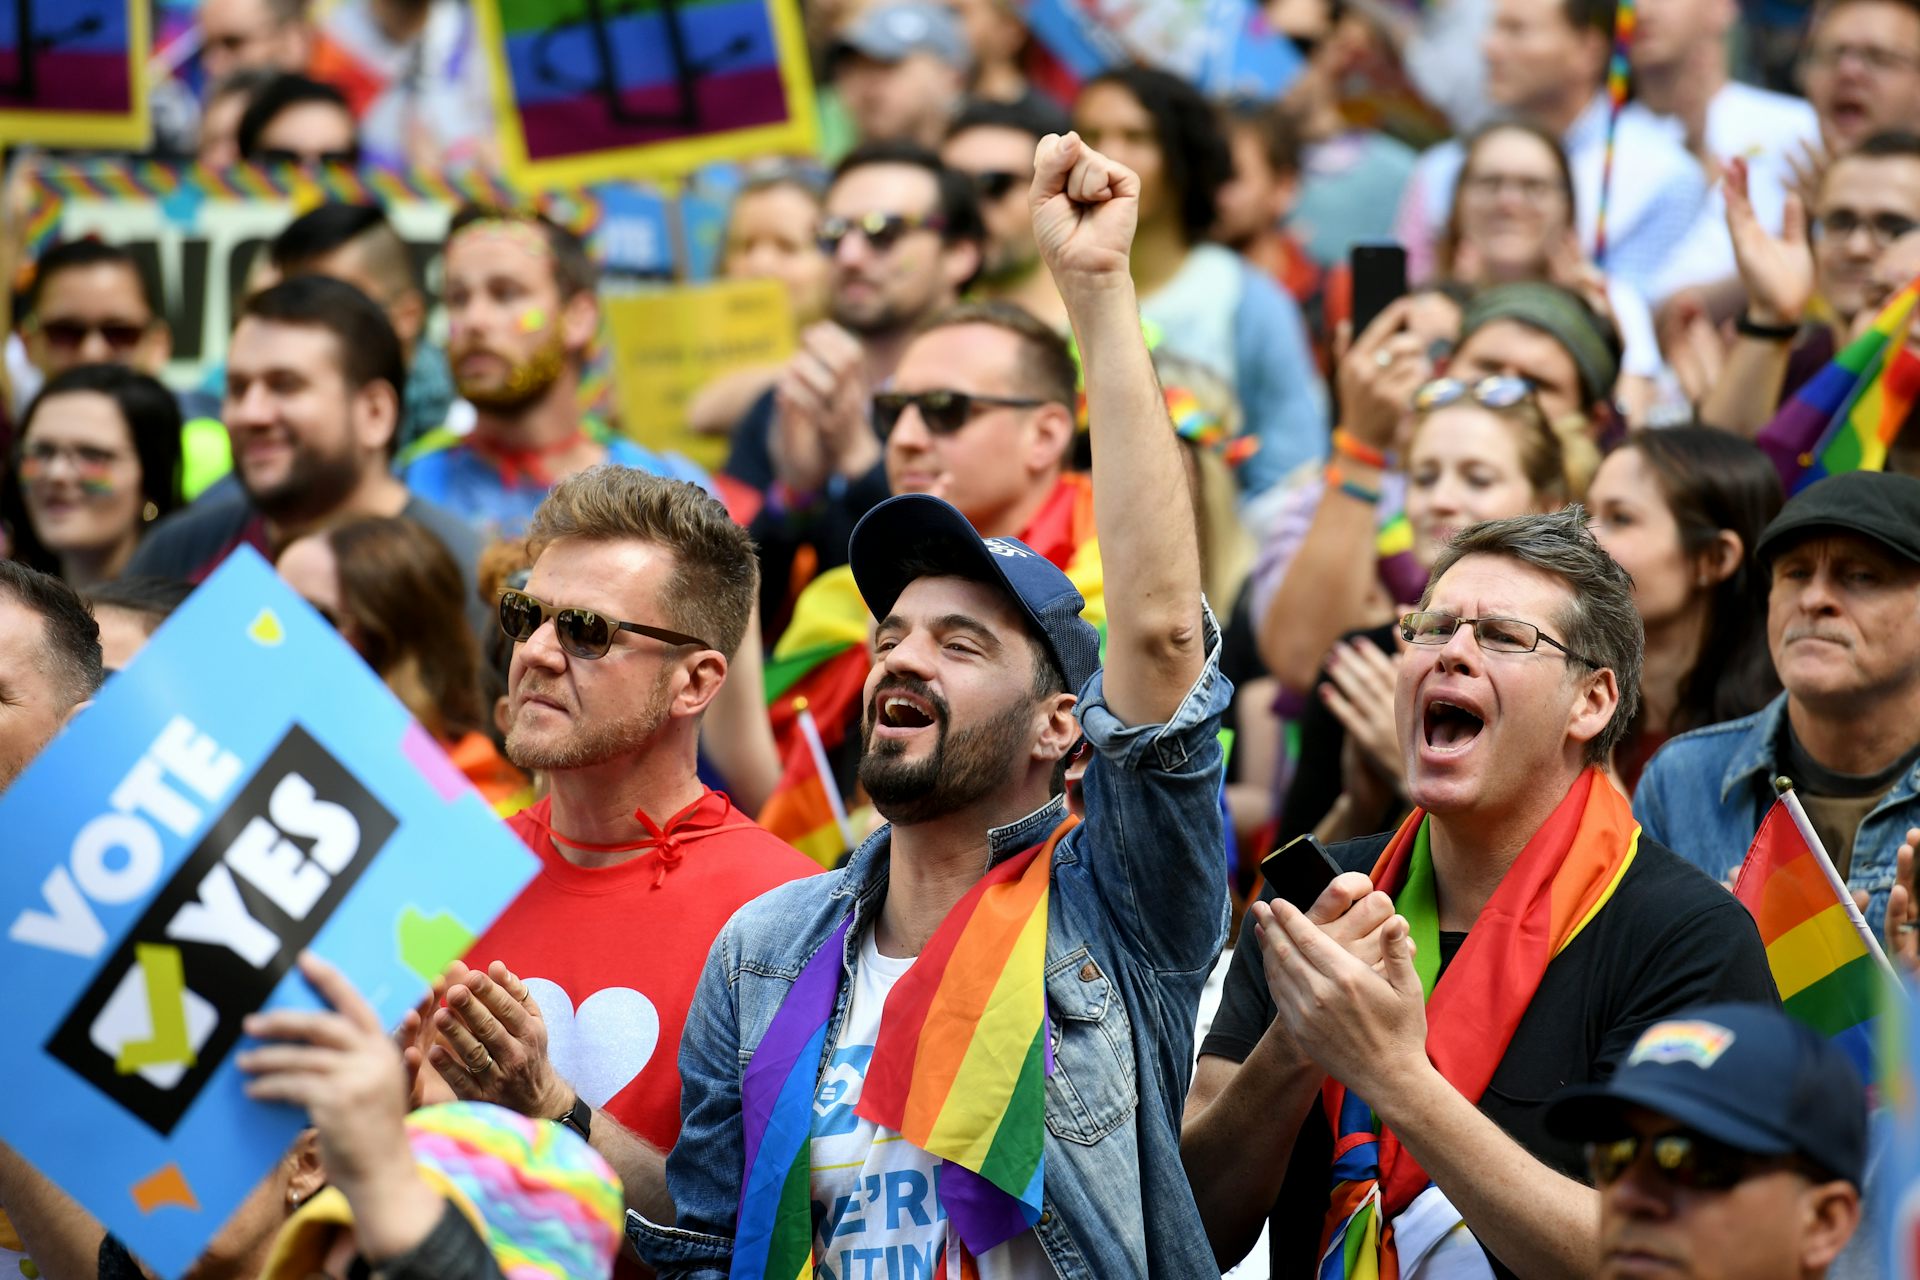 nike australian marriage equality swoosh vote